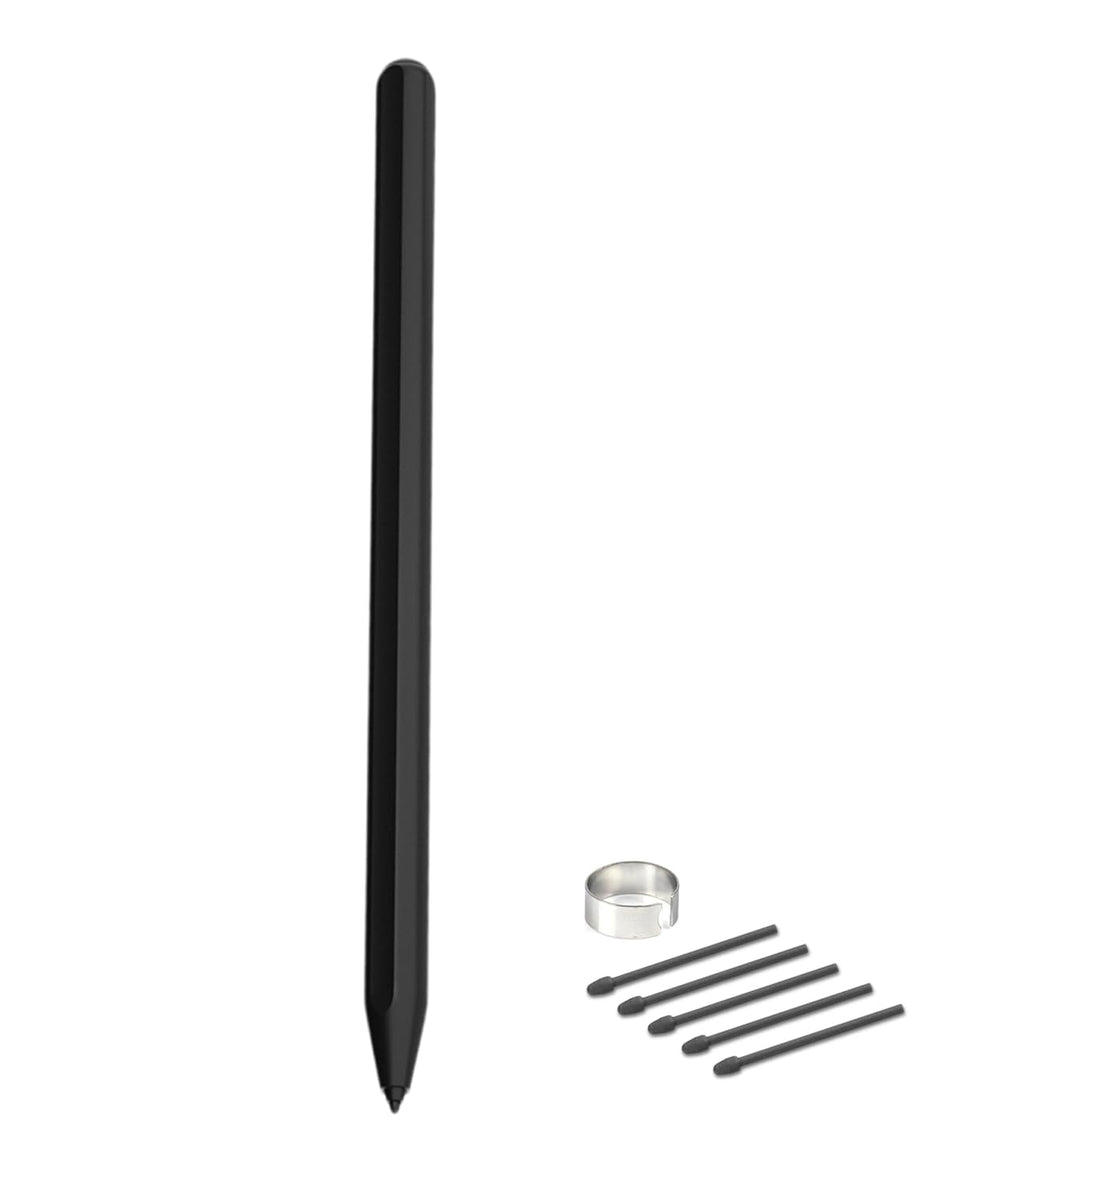 Marker Pen for Remarkable 2 Pen, Digital Eraser,4096 Pressure Sensitivity, Palm Rejection, Remarkable Pen Plus Remarkable2 Stylus Pen with 5Pcs Tips/Nibs (Black)